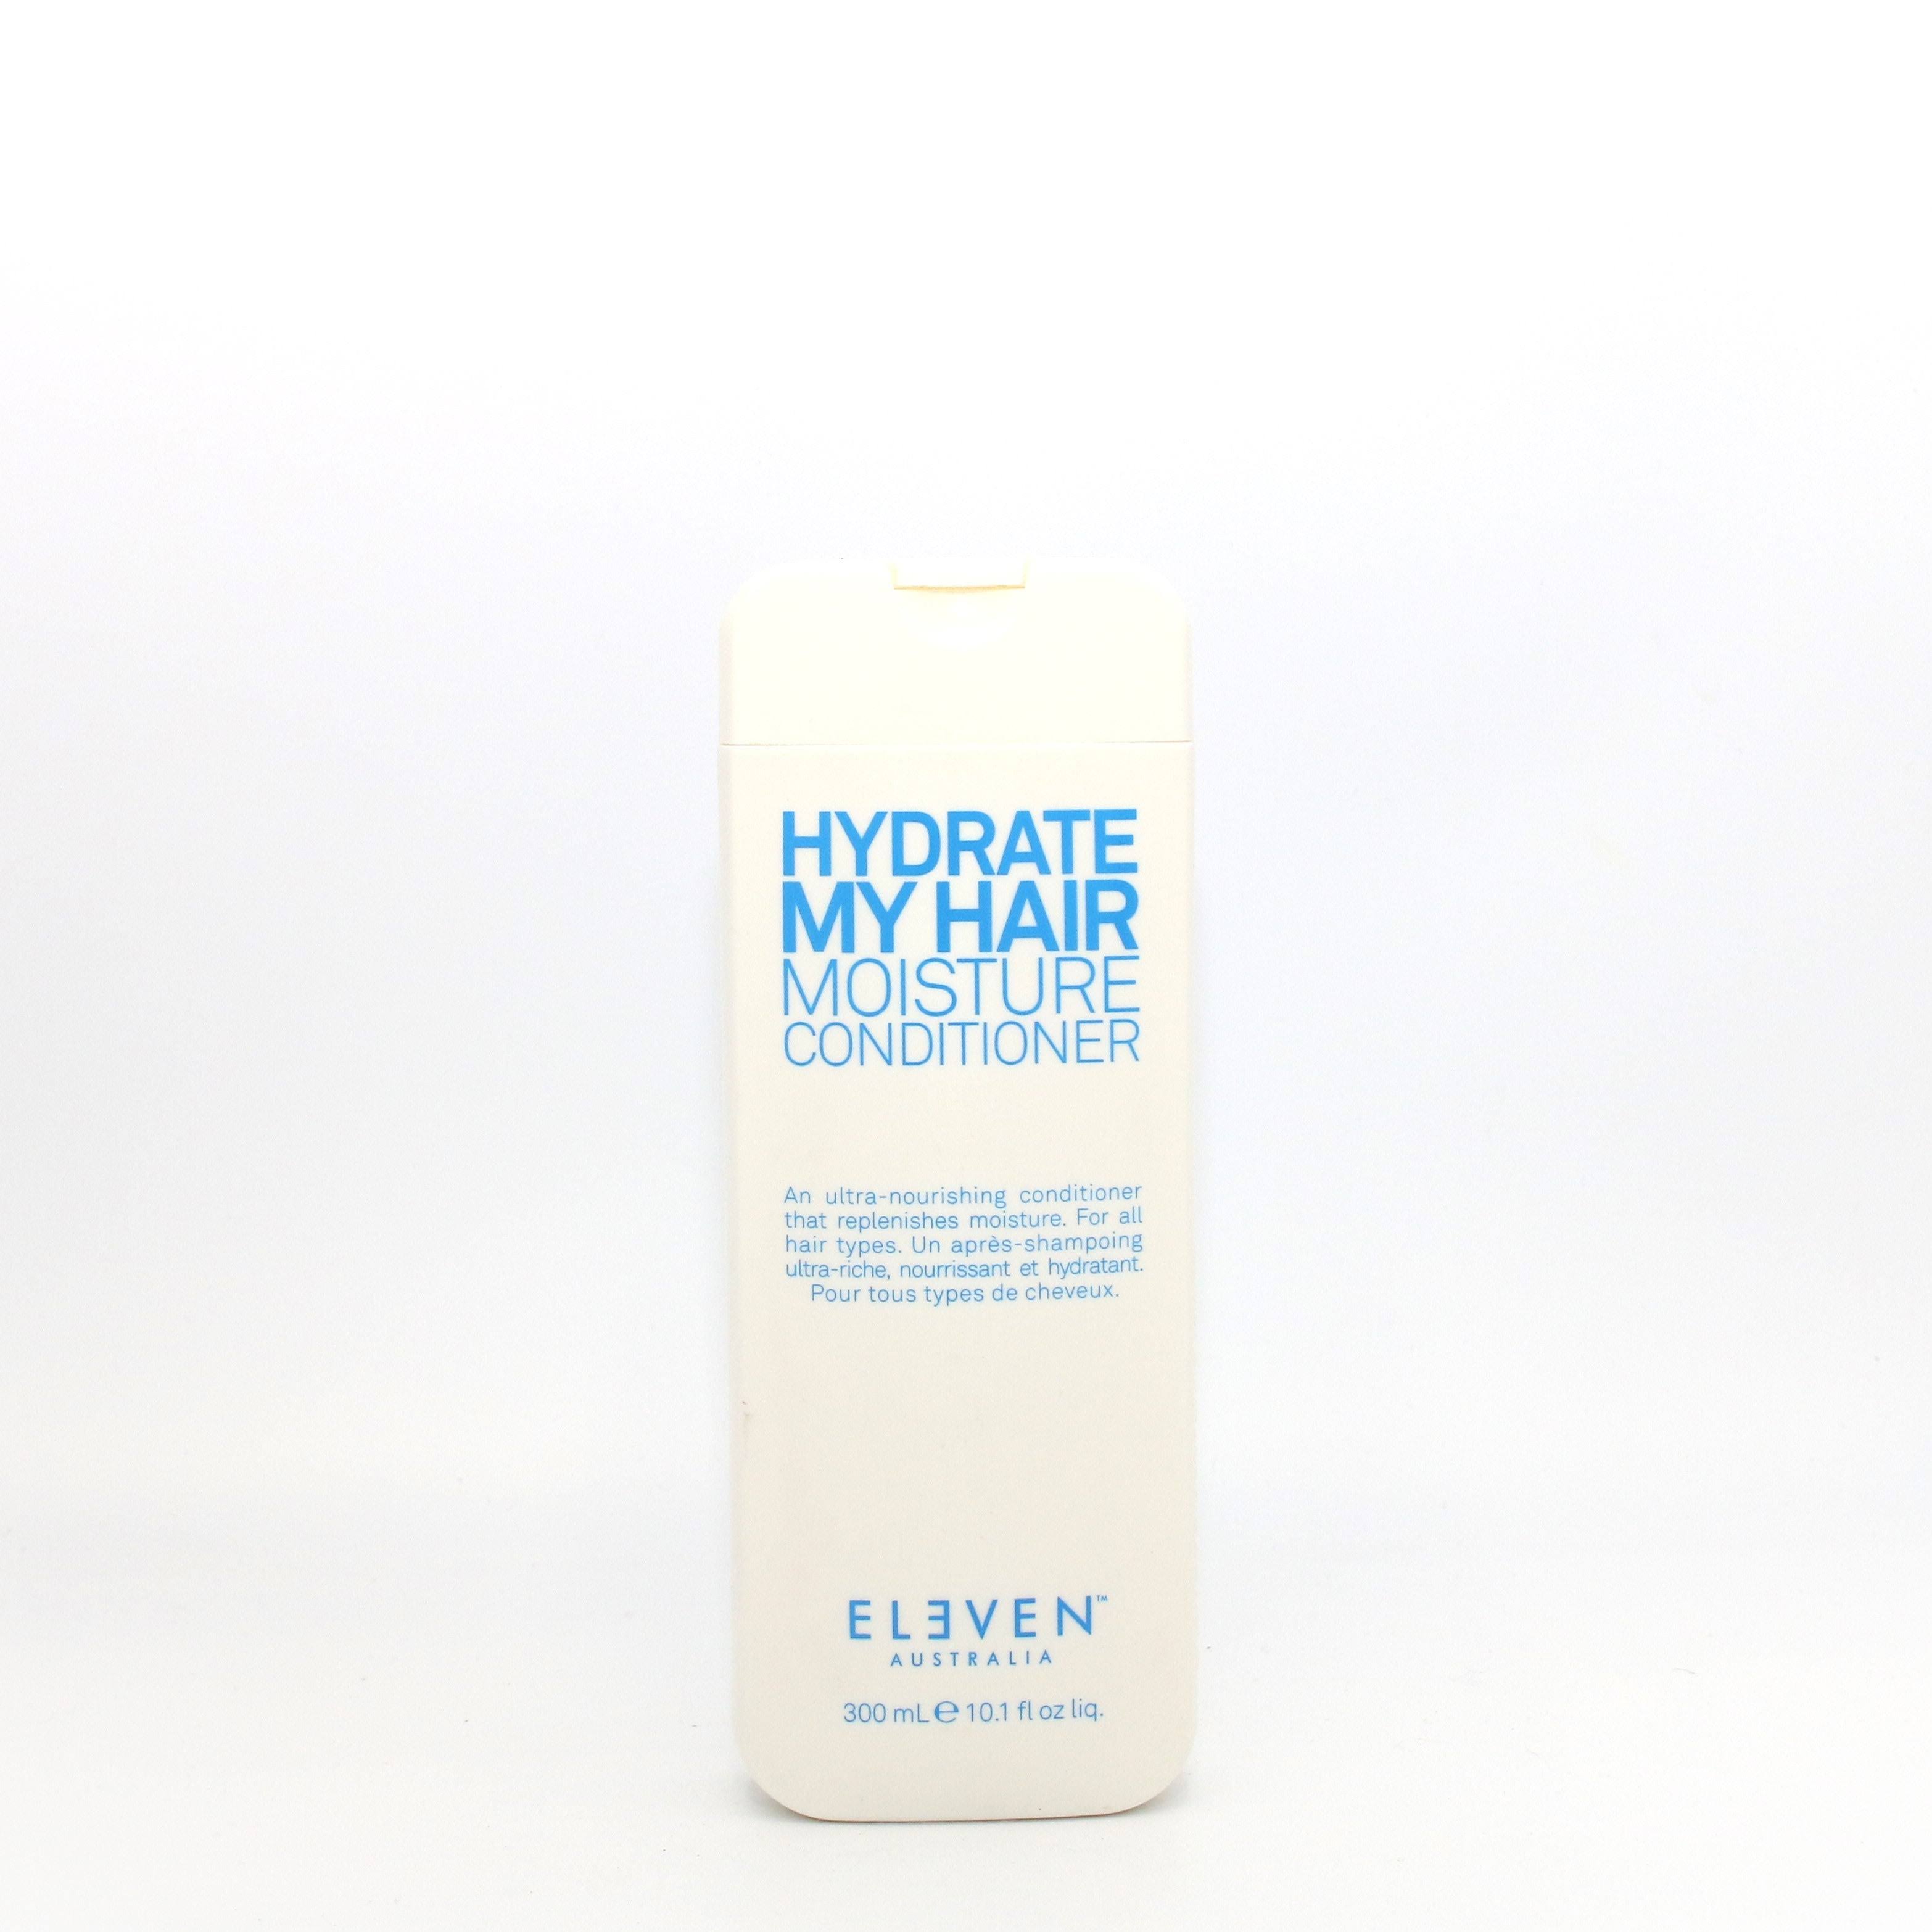 Eleven Australia Hydrate My Hair Moisture Shampoo and Conditioner - 10.1oz